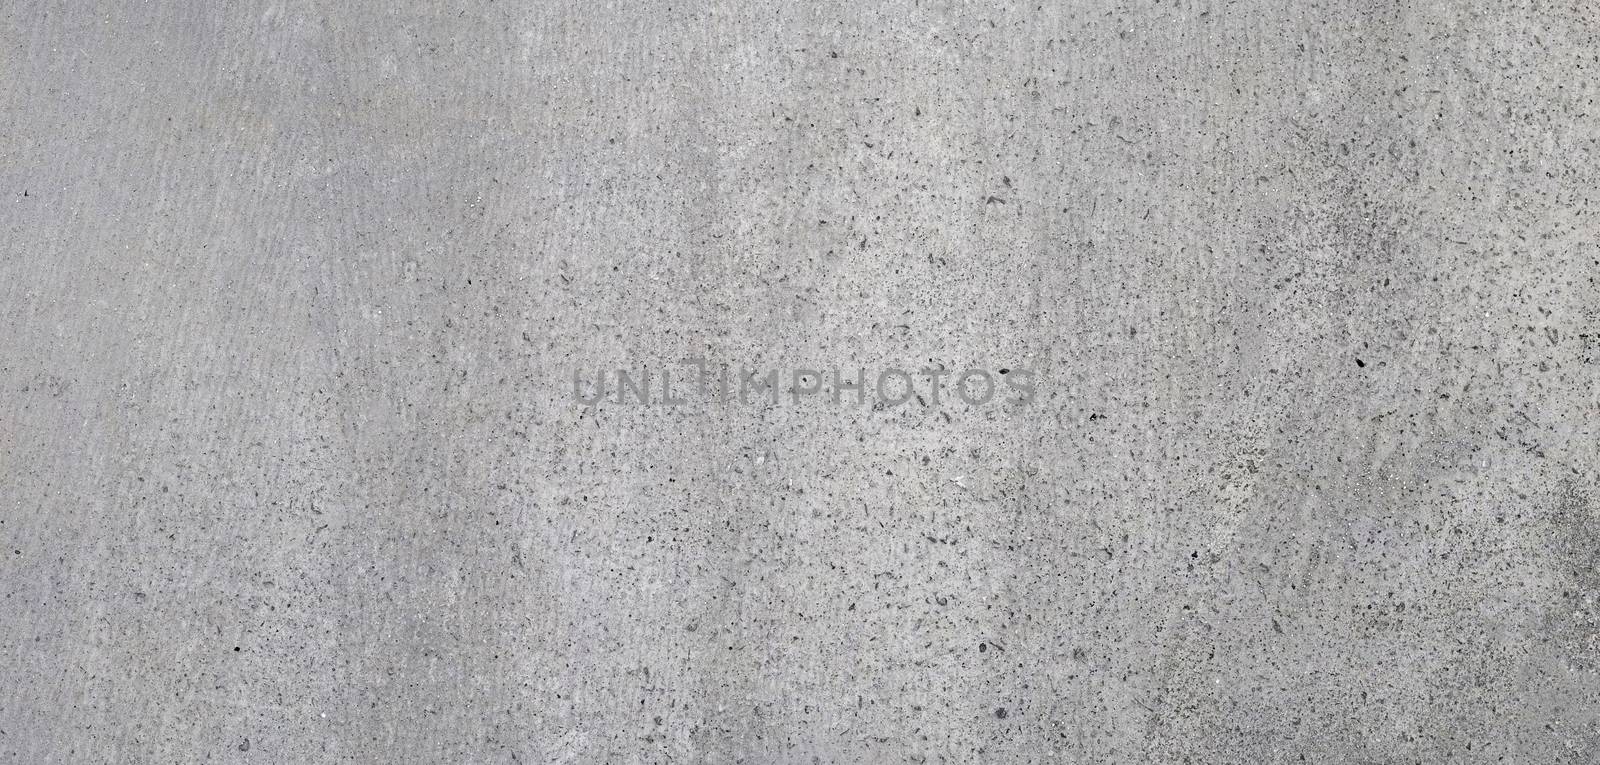 Texture of concrete floor background. by Bowonpat